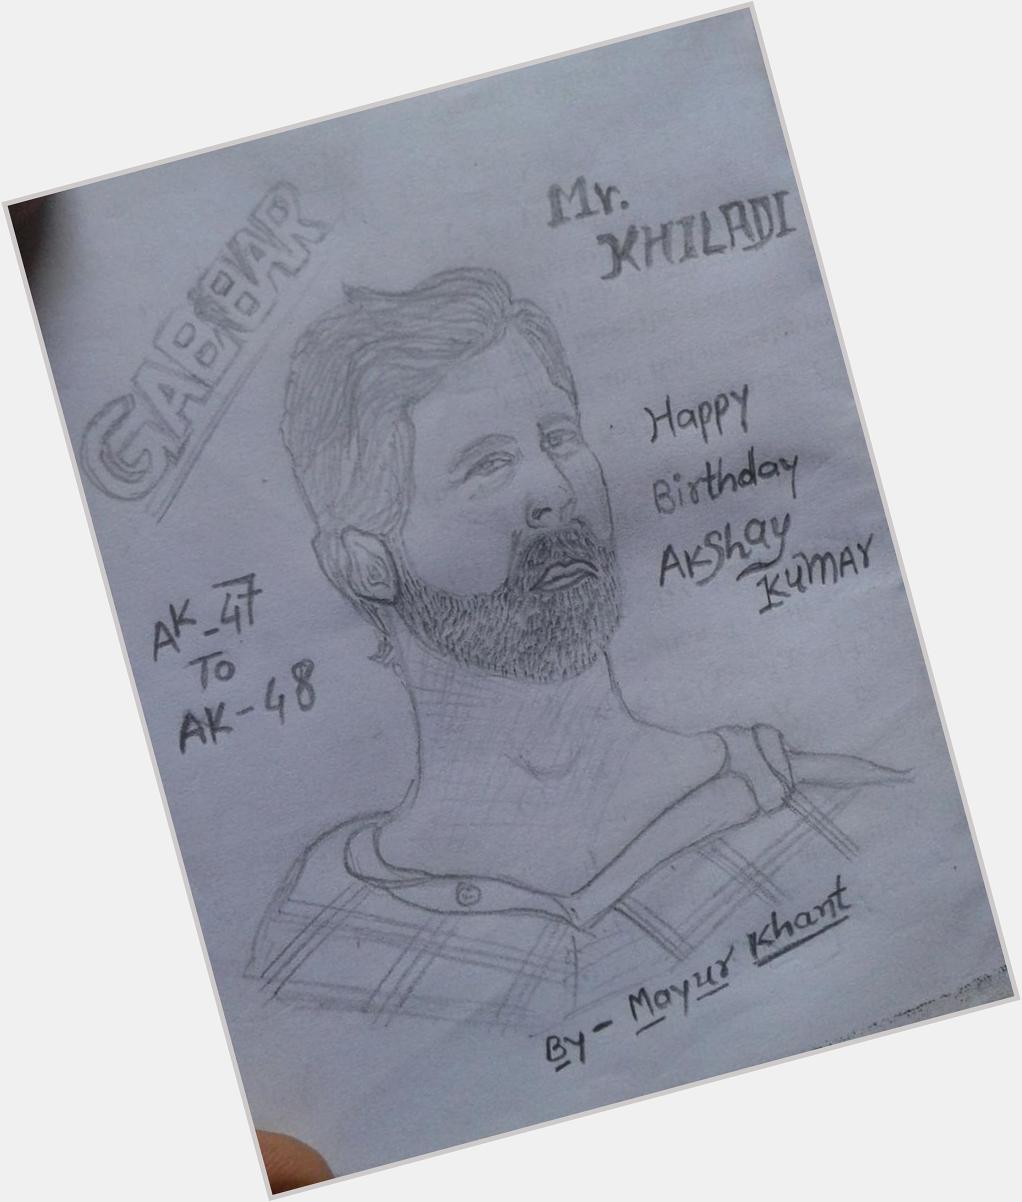 Wish Akshay Kumar a very very Happy Birthday 5 day before. 
Sketch by Akshay Kumar fan Mayur Khant. 